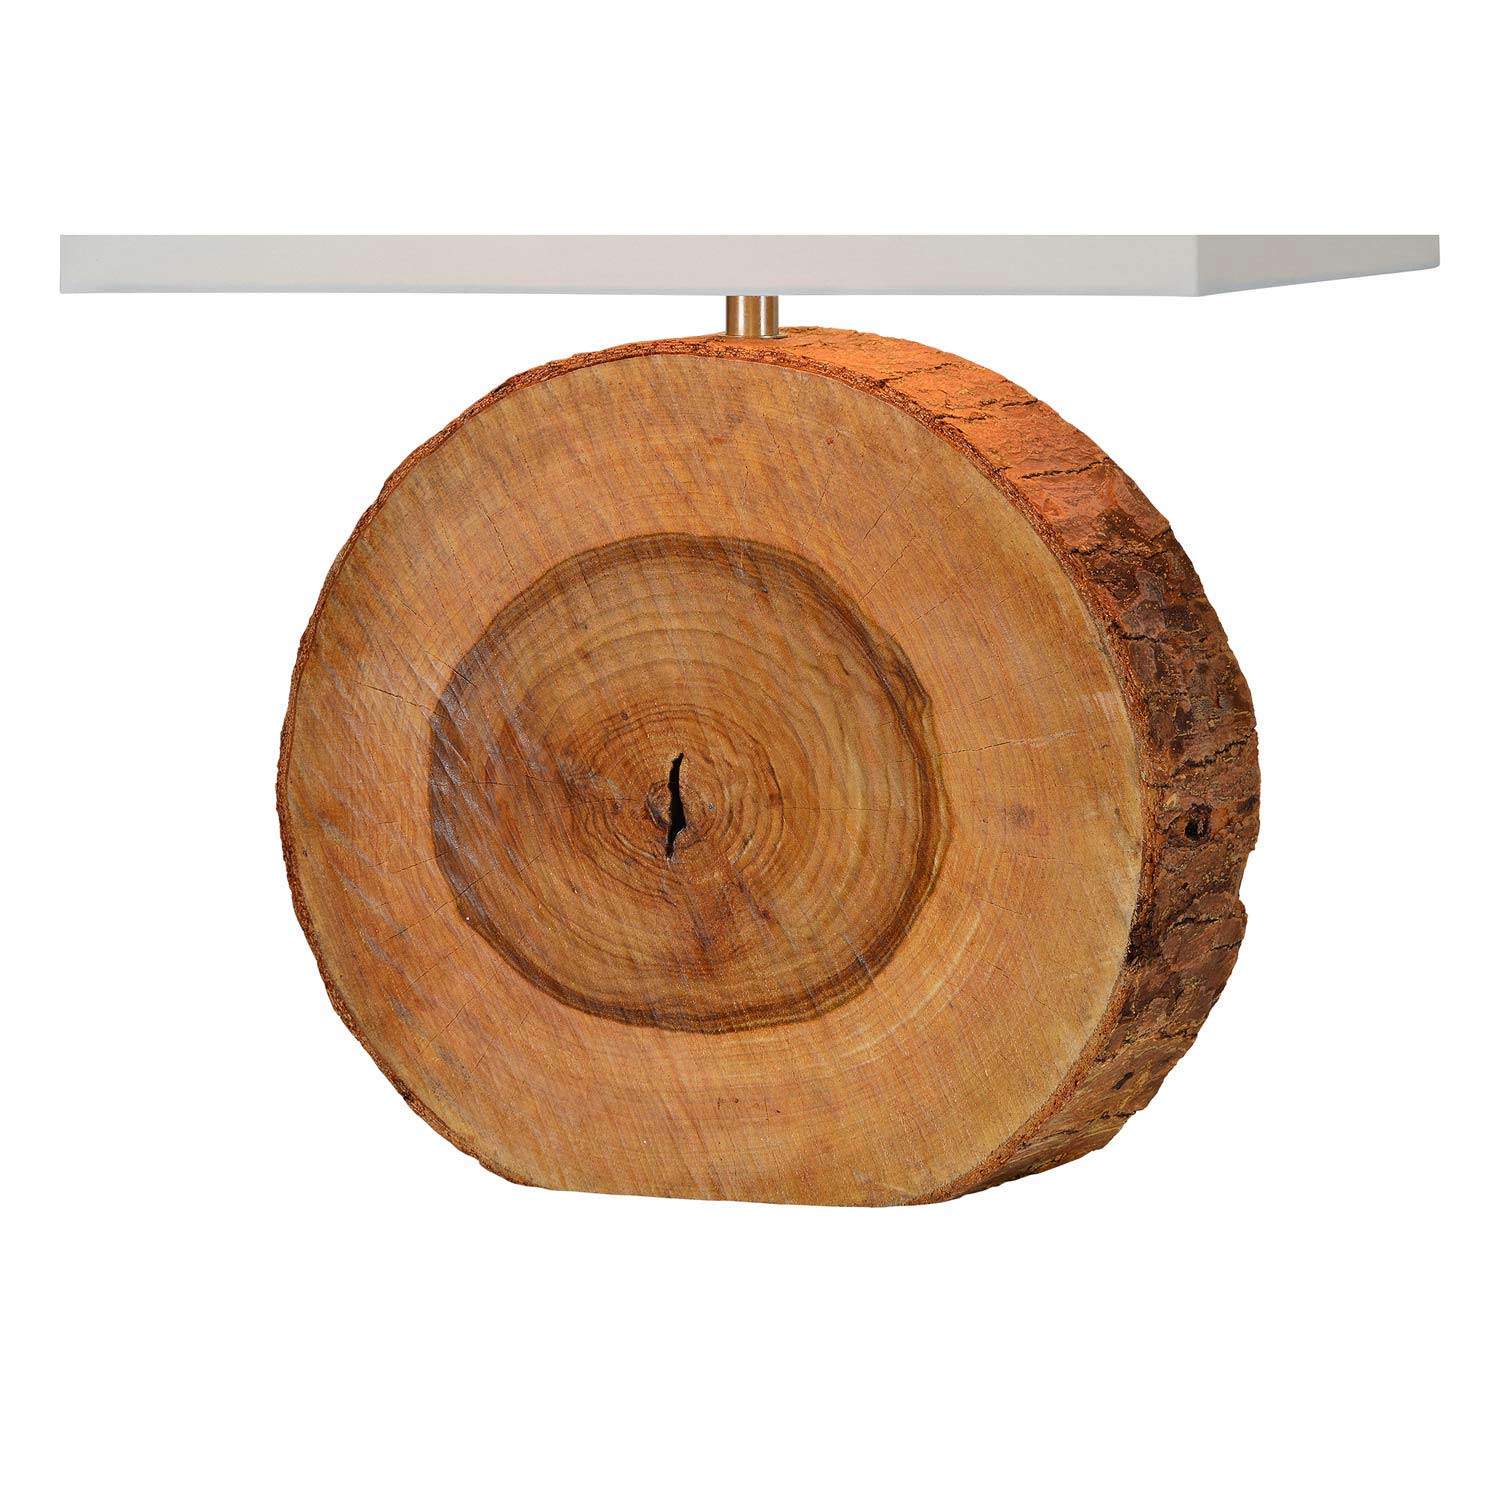 Ren-Wil Elixa Table Lamp - Natural Wood